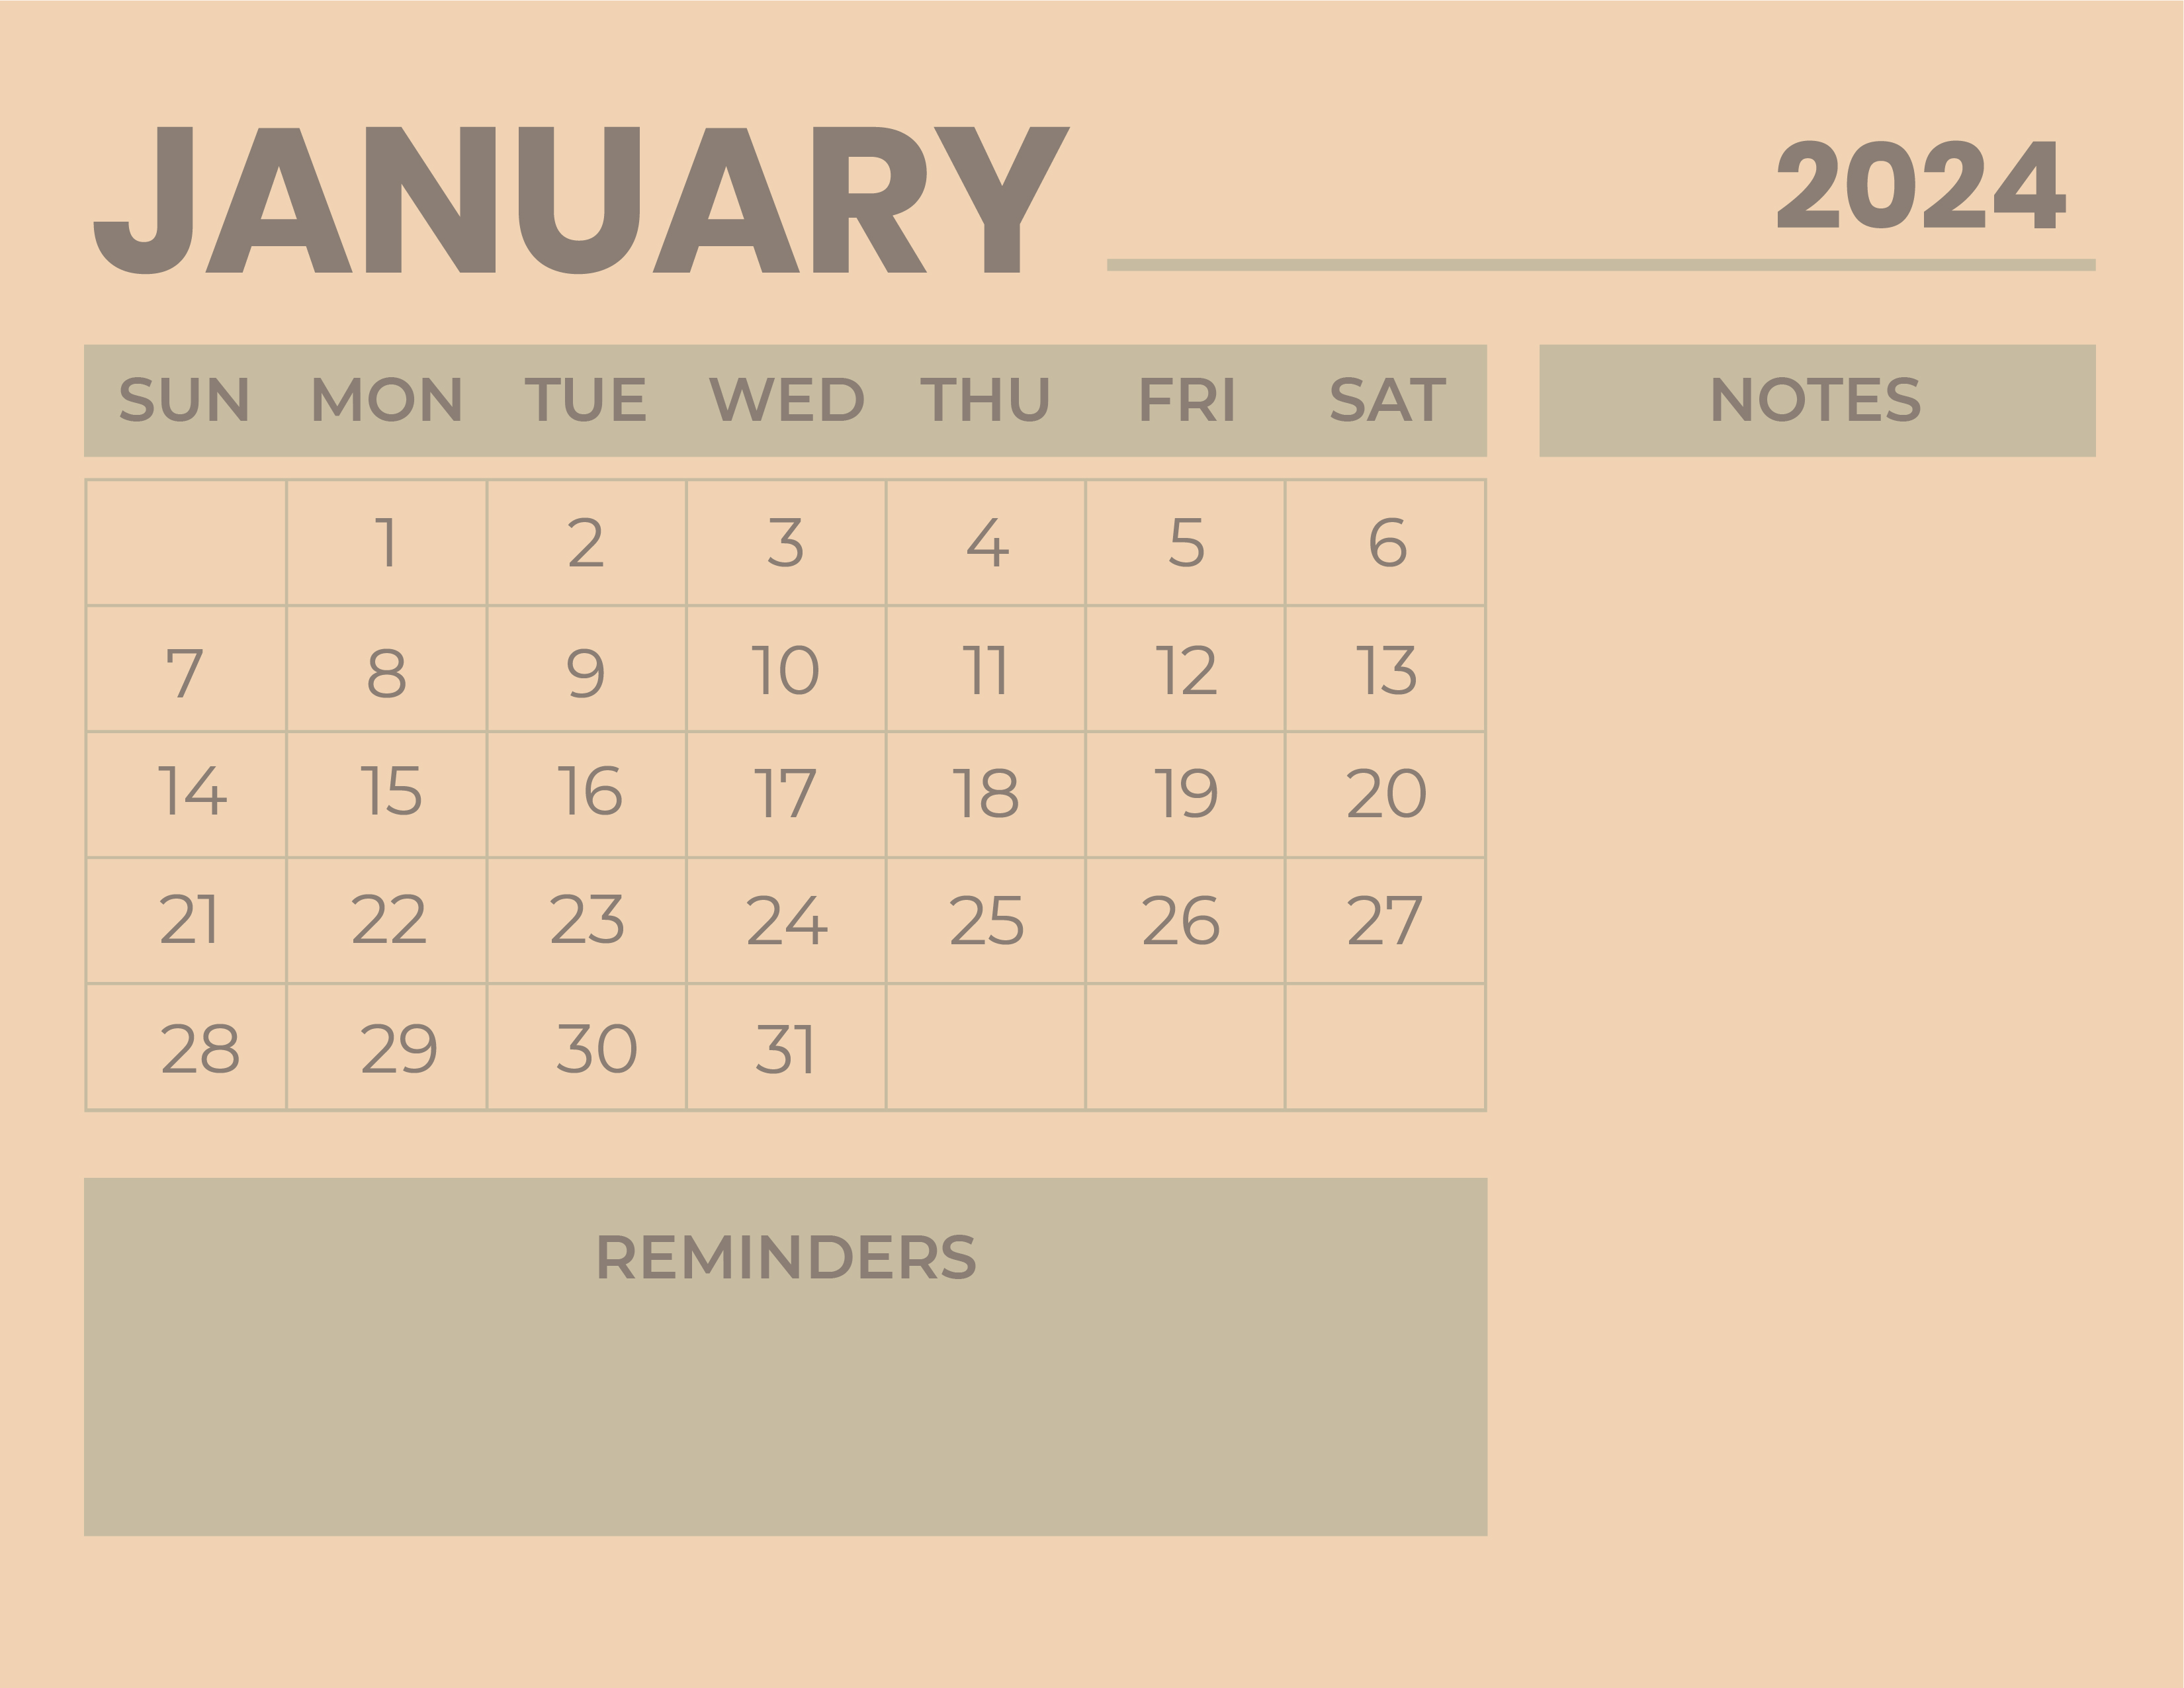 FREE January 2024 Calendar Template Download in Word, Google Docs